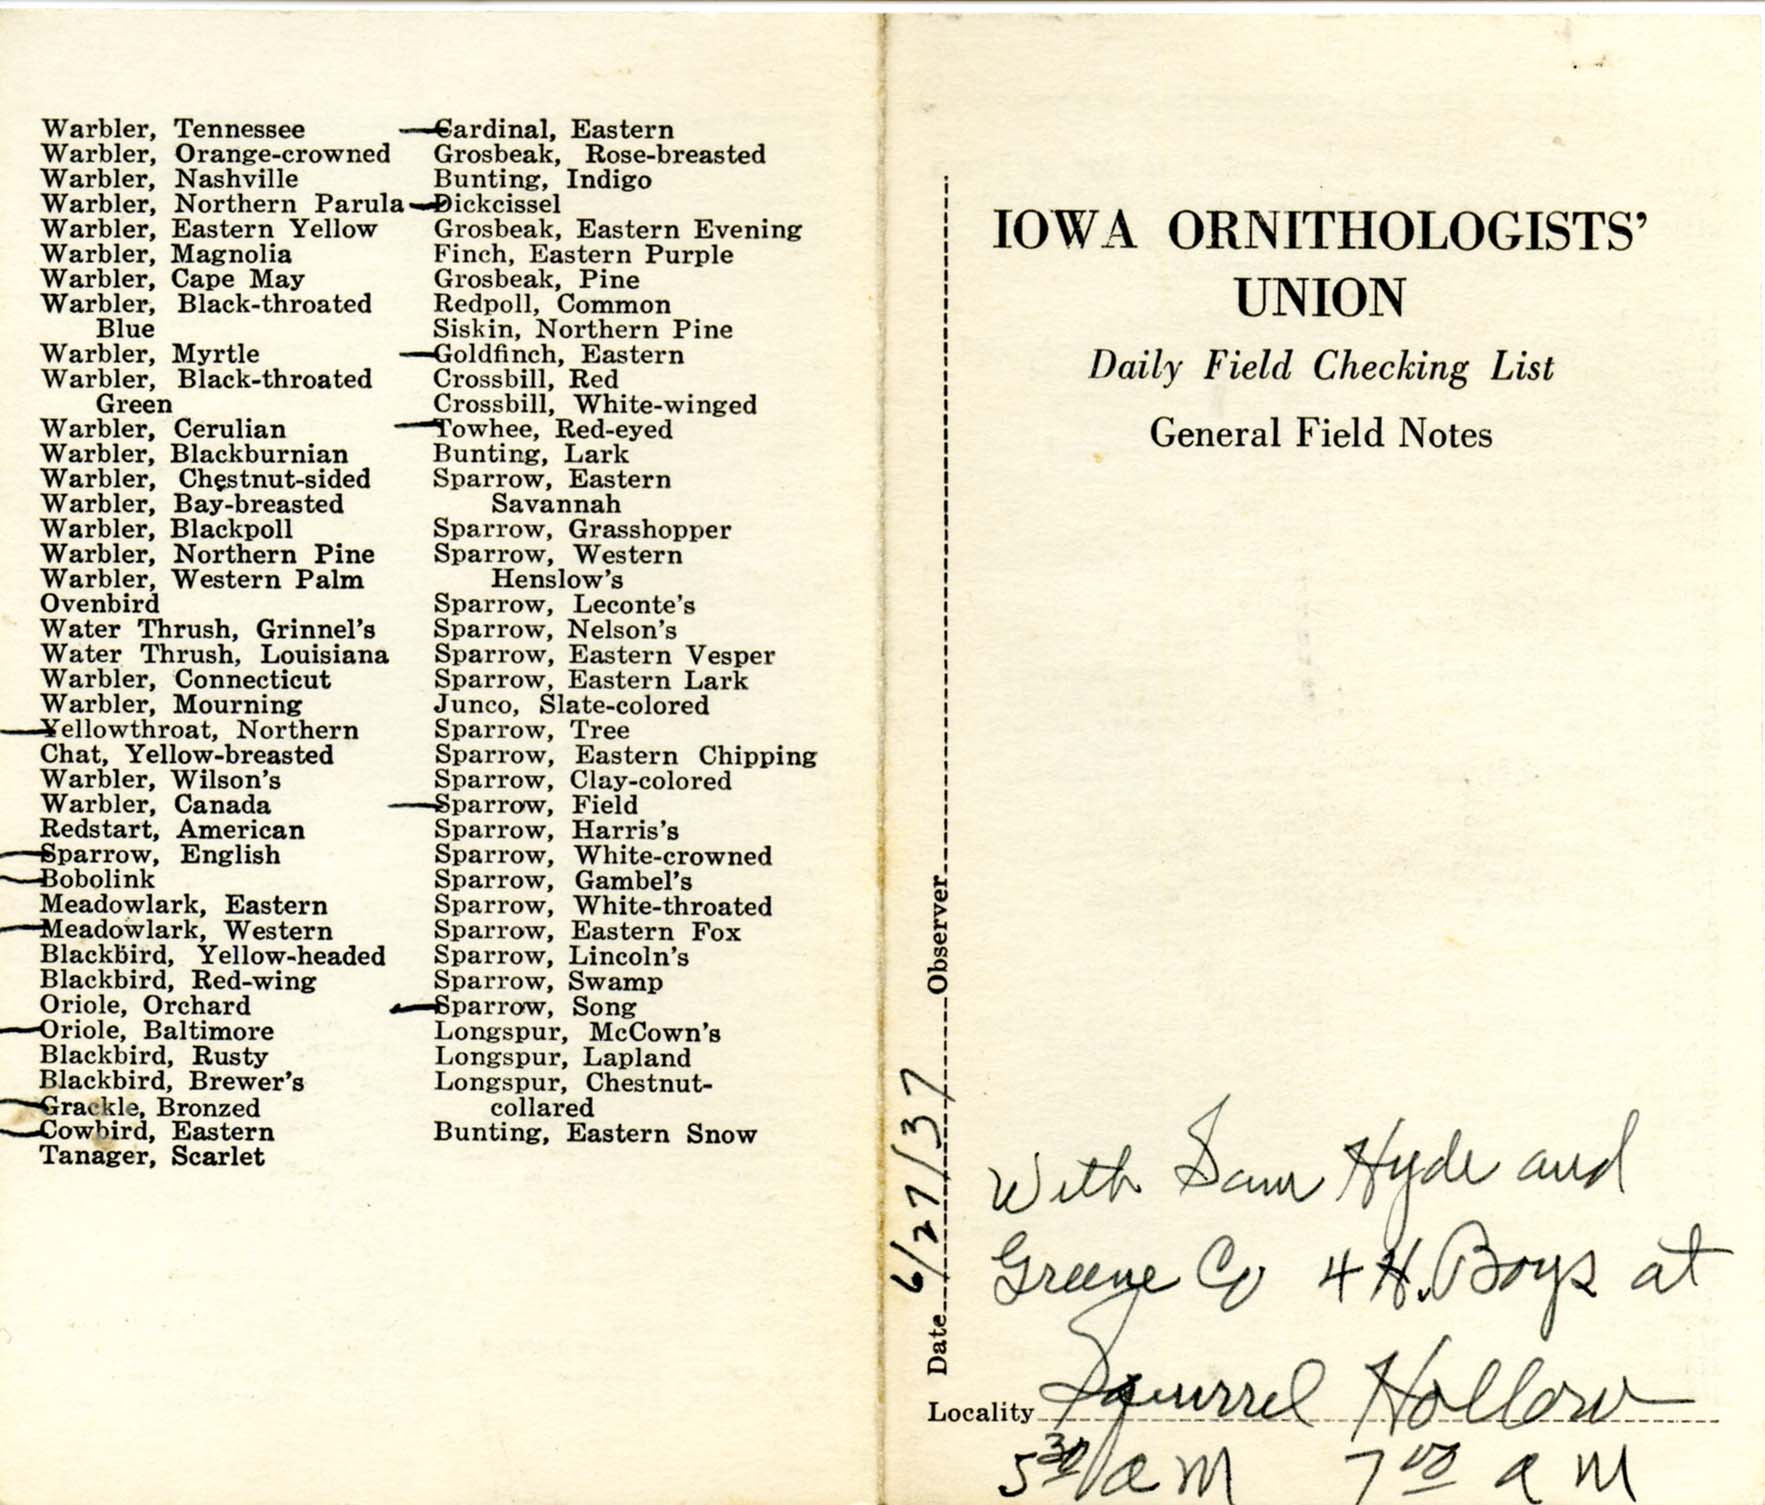 Daily field checking list by Walter Rosene, June 27, 1937